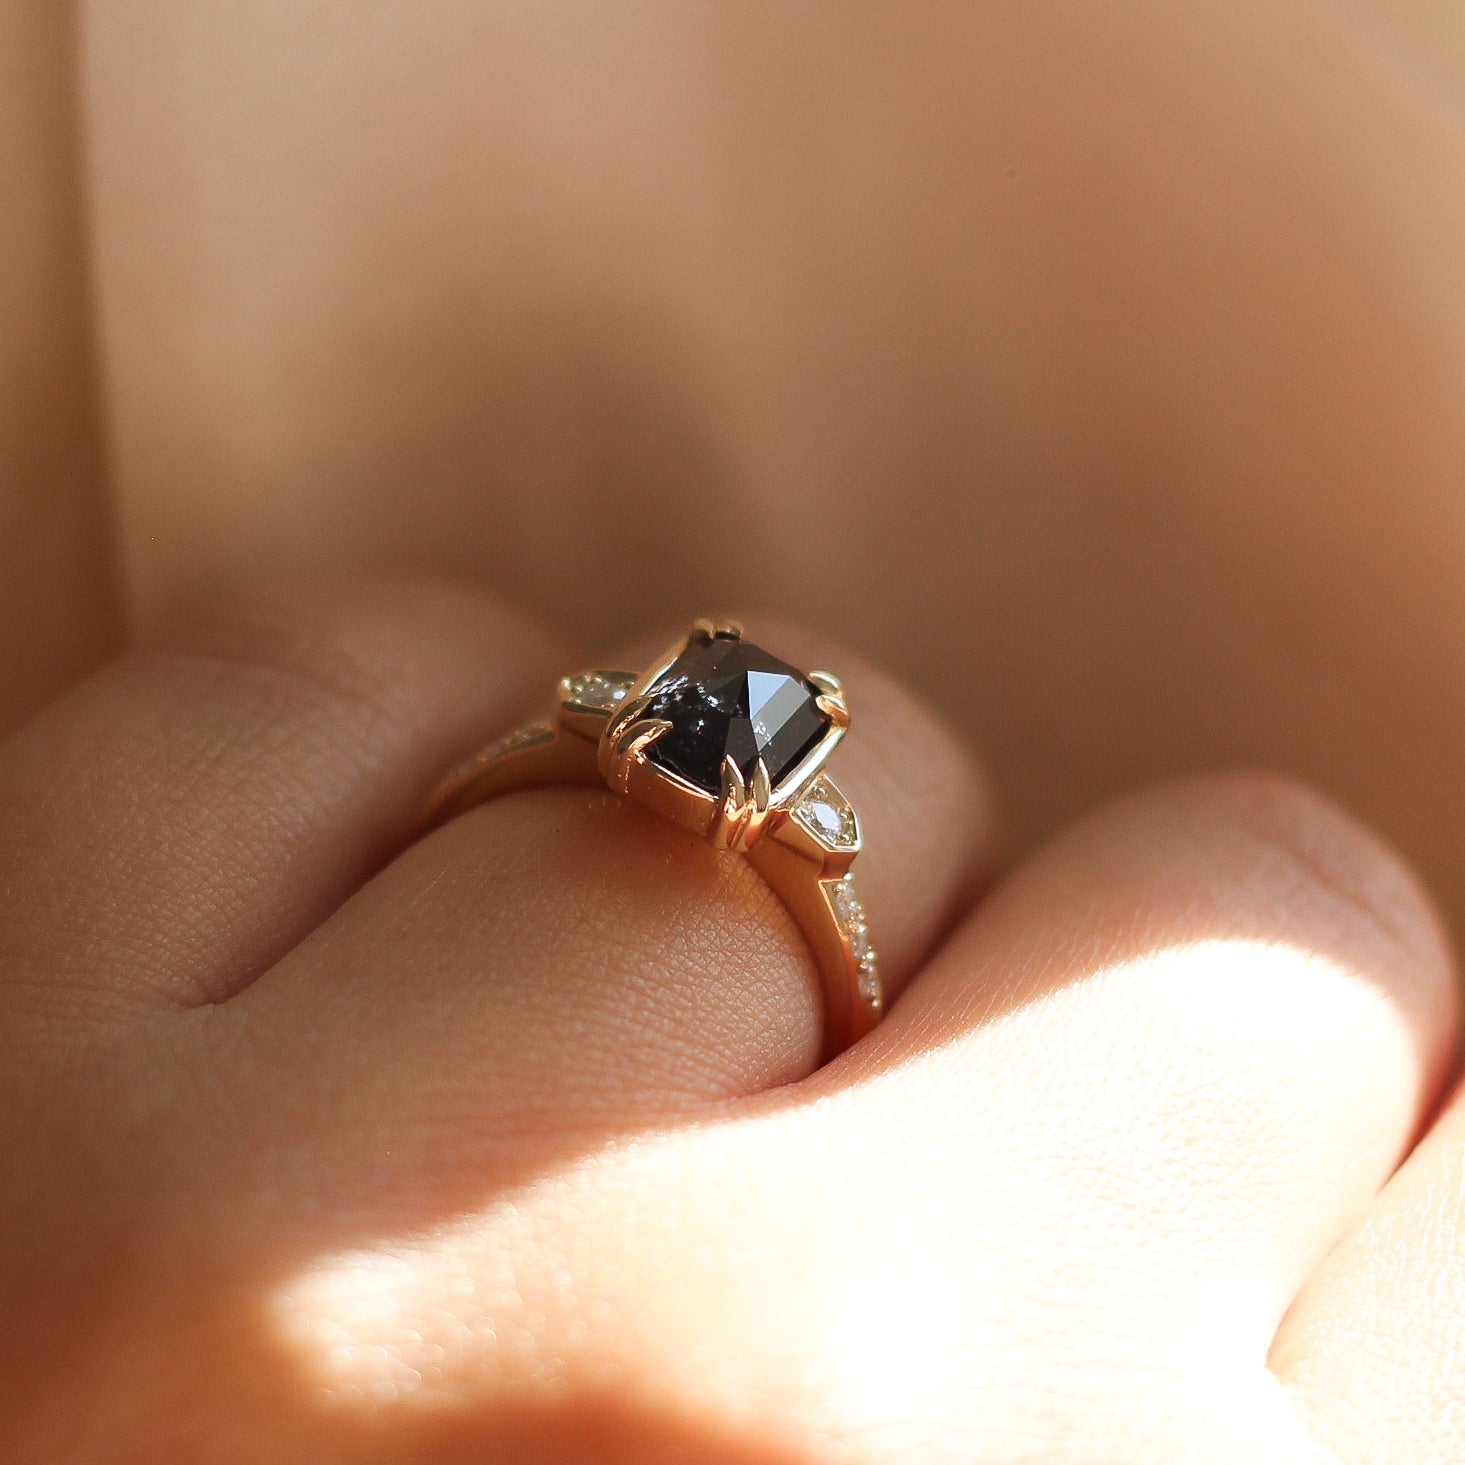 European Engagement Ring - Black Emerald Diamond Triquetra Celtic Engagement  Ring in 14K White Gold - ER245EC